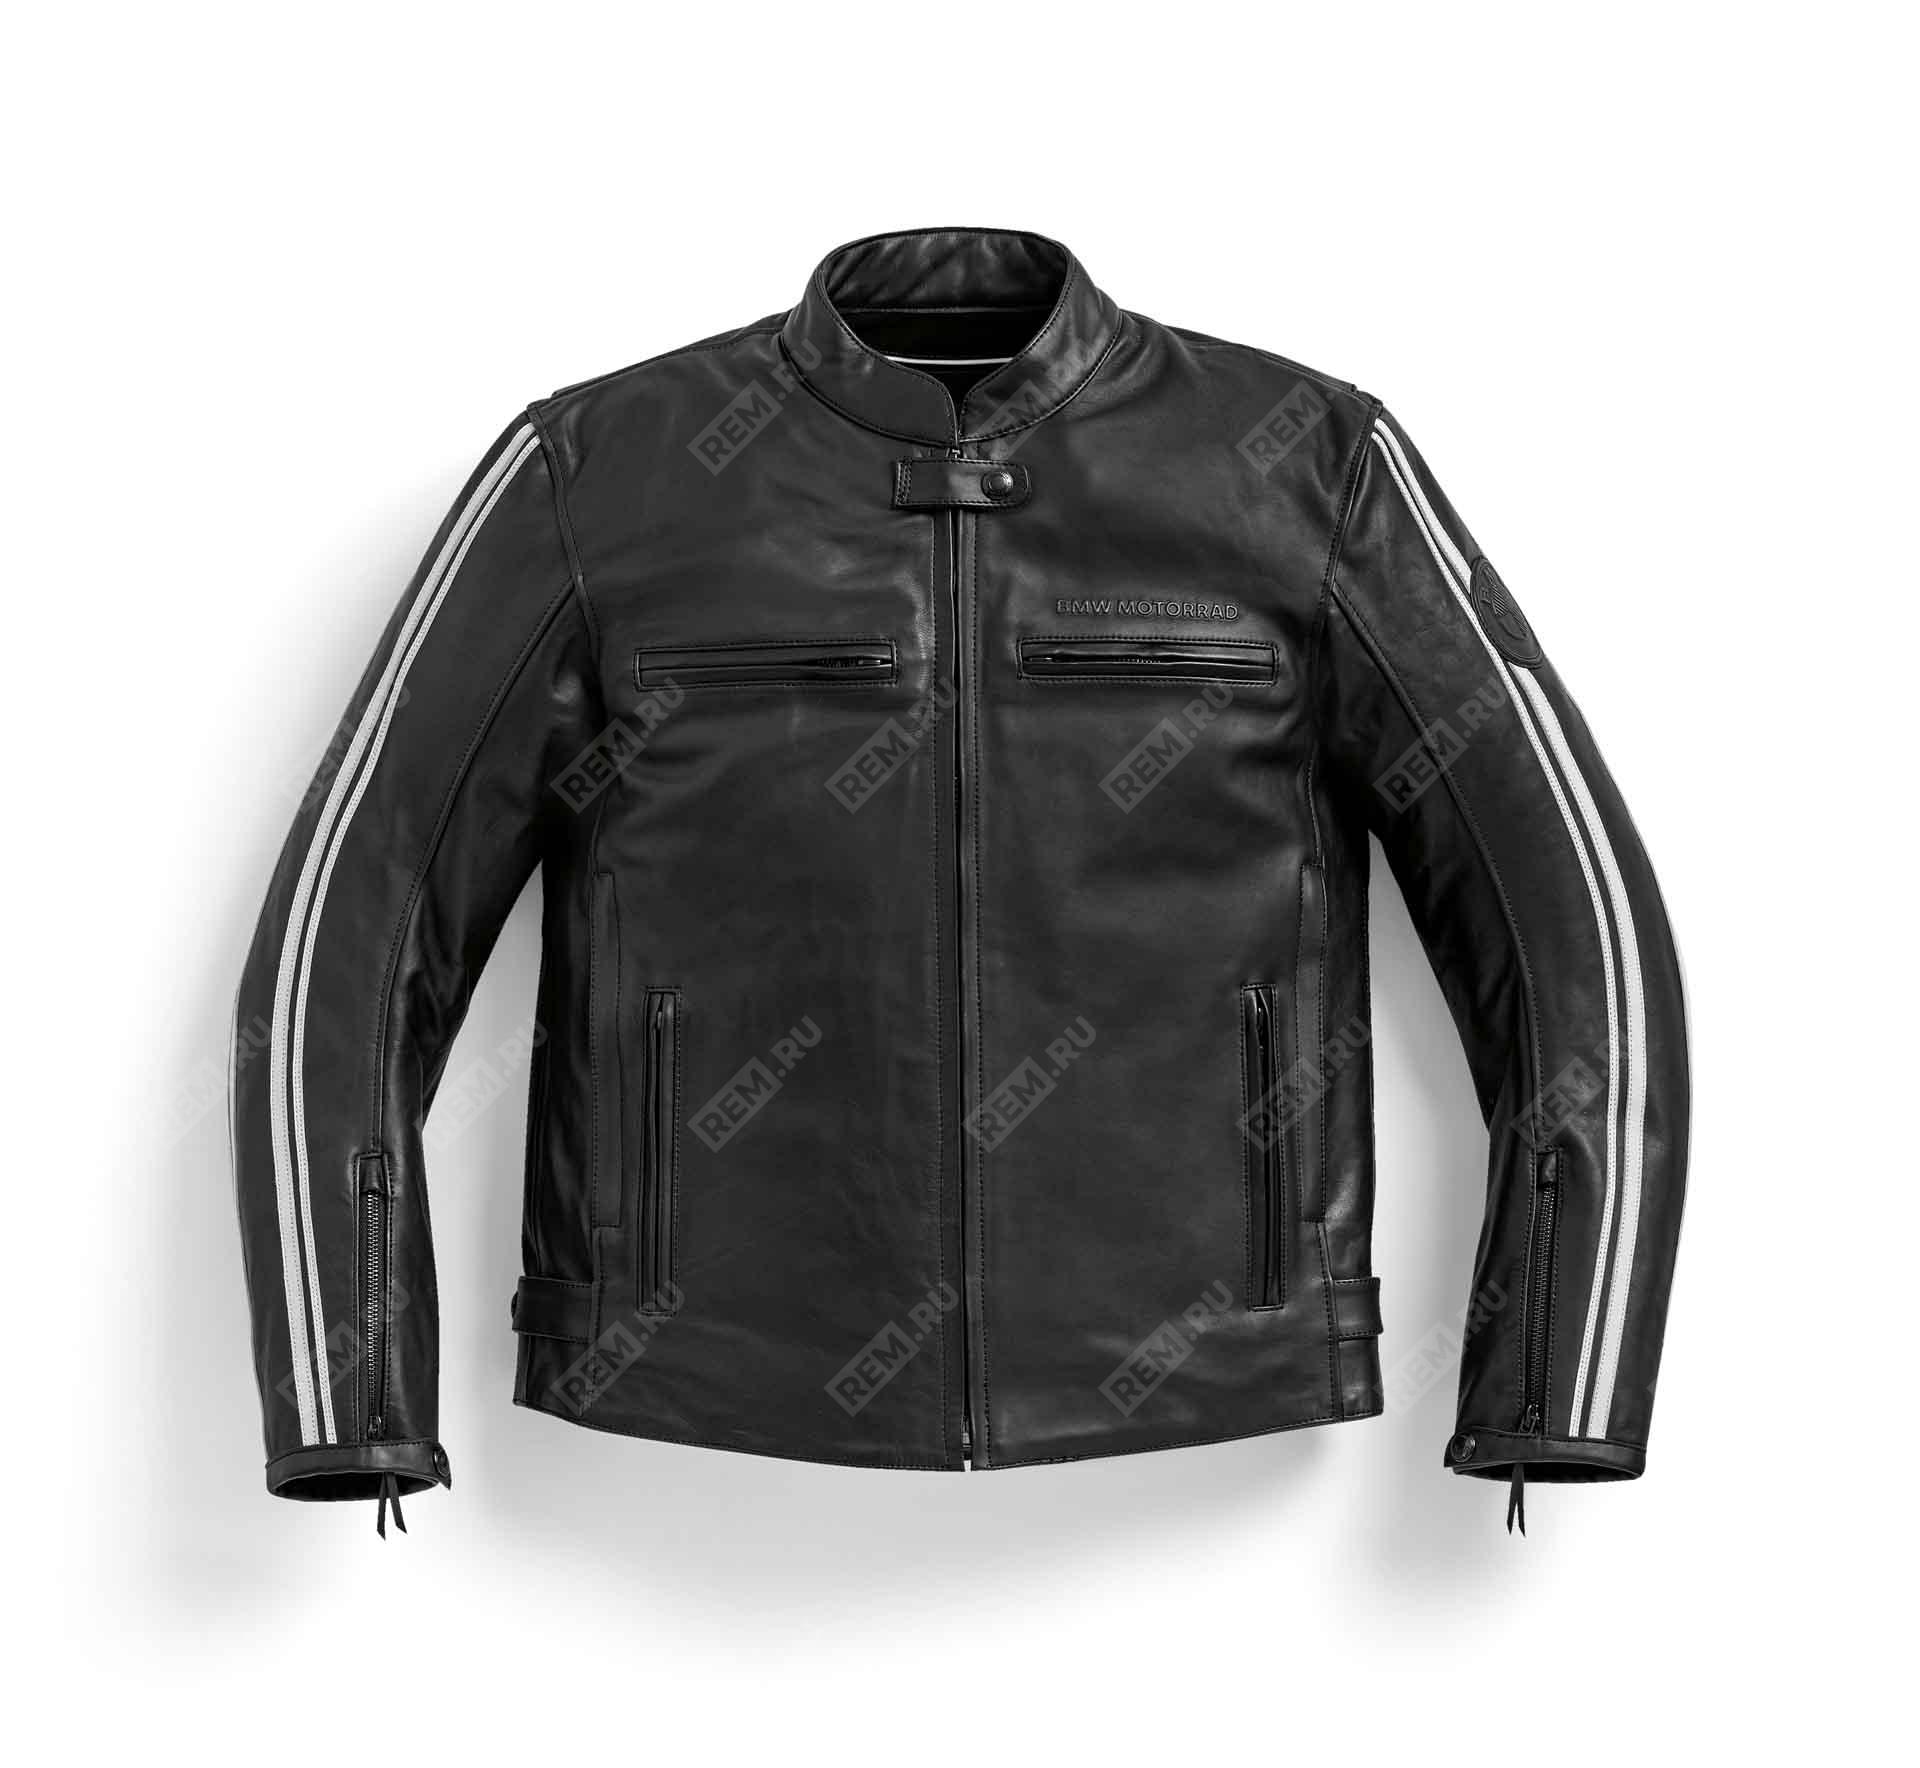  76121542205  куртка мужская кожаная twinstripes черная, размер xl, comfort fit (фото 1)